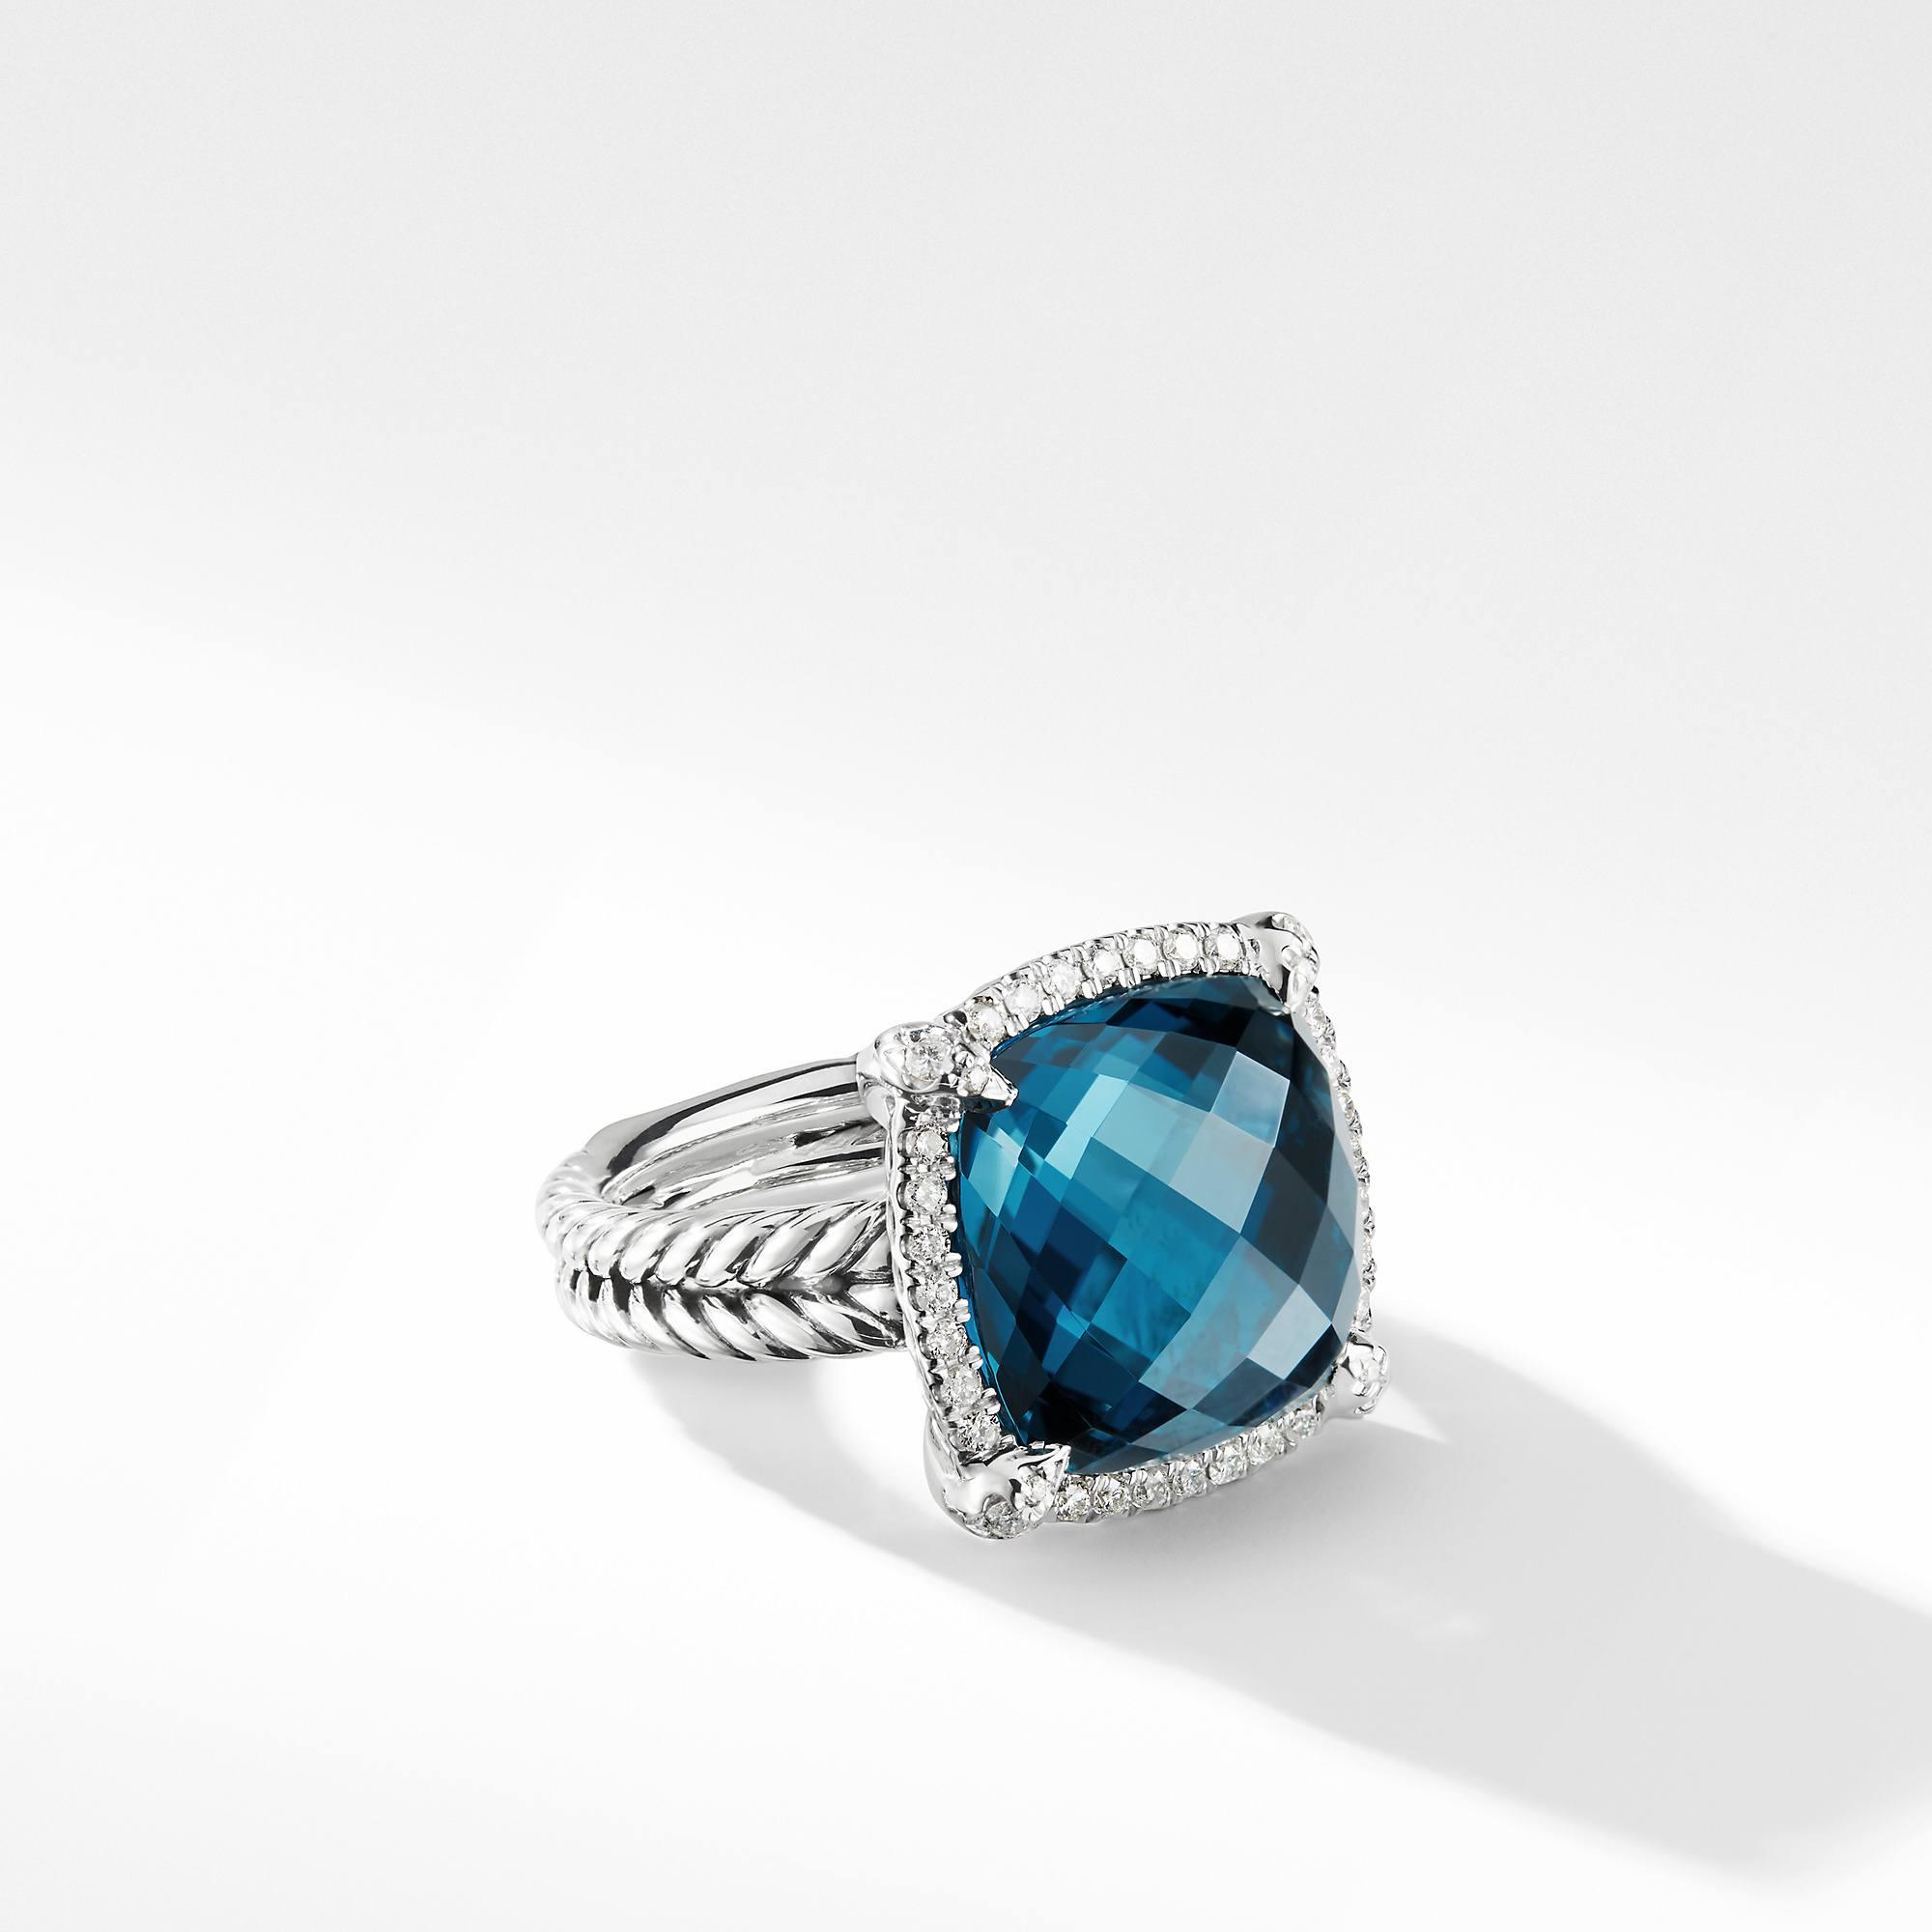 David Yurman Chatelaine Pave Bezel Ring with Hampton Blue Topaz and Diamonds, size 6